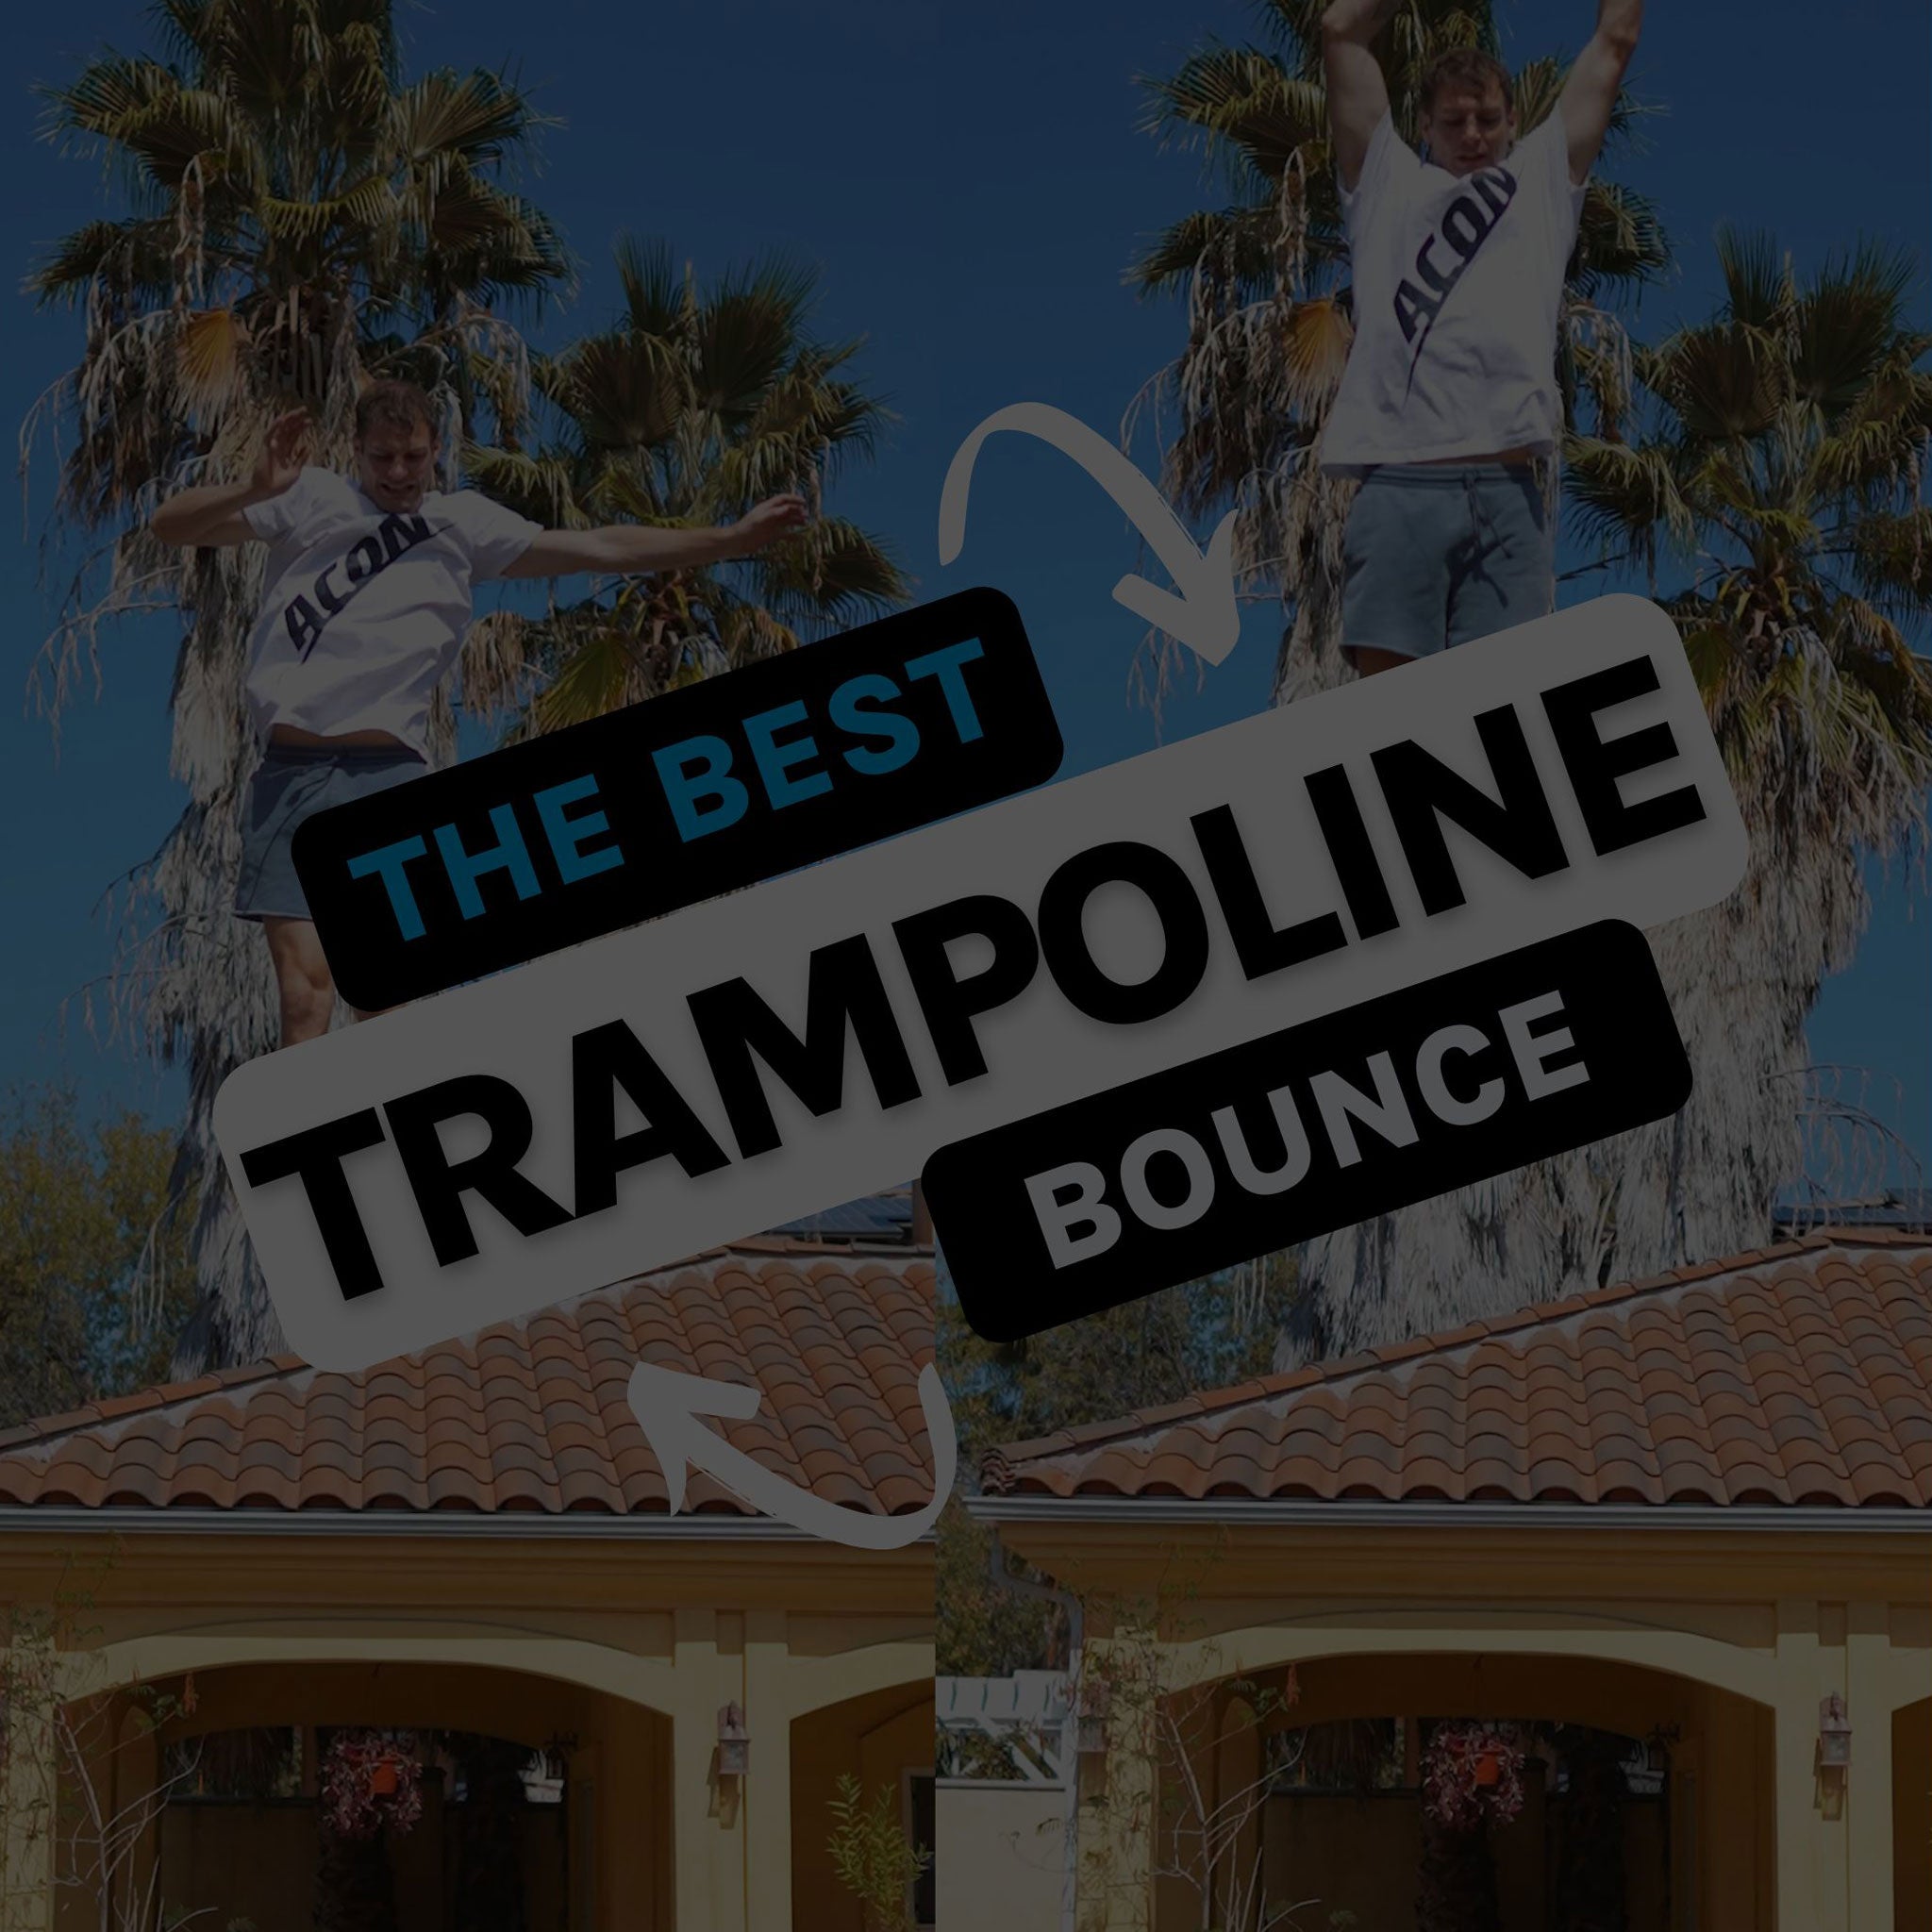 The best trampoline bounce - videon stillkuva.